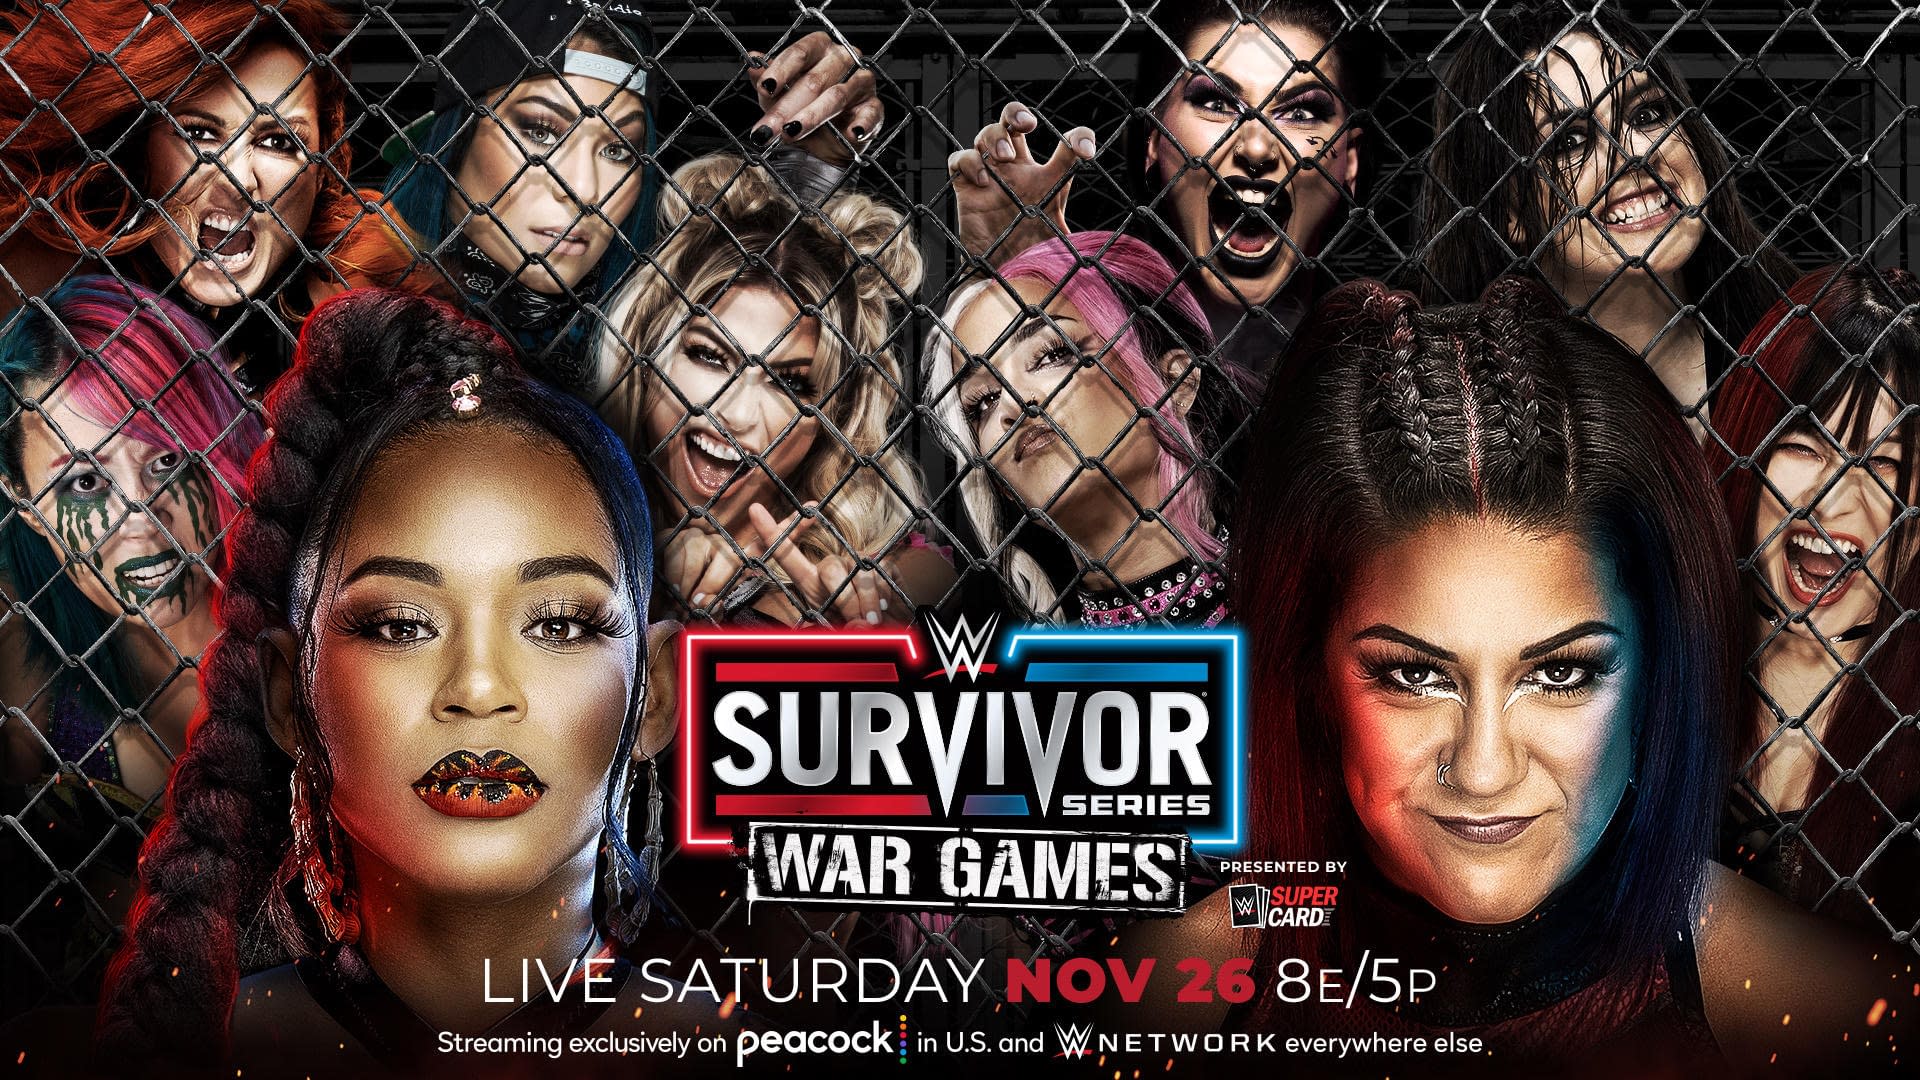 Team Bianca Belair Beats Damage CTRL in War Games at Survivor Series